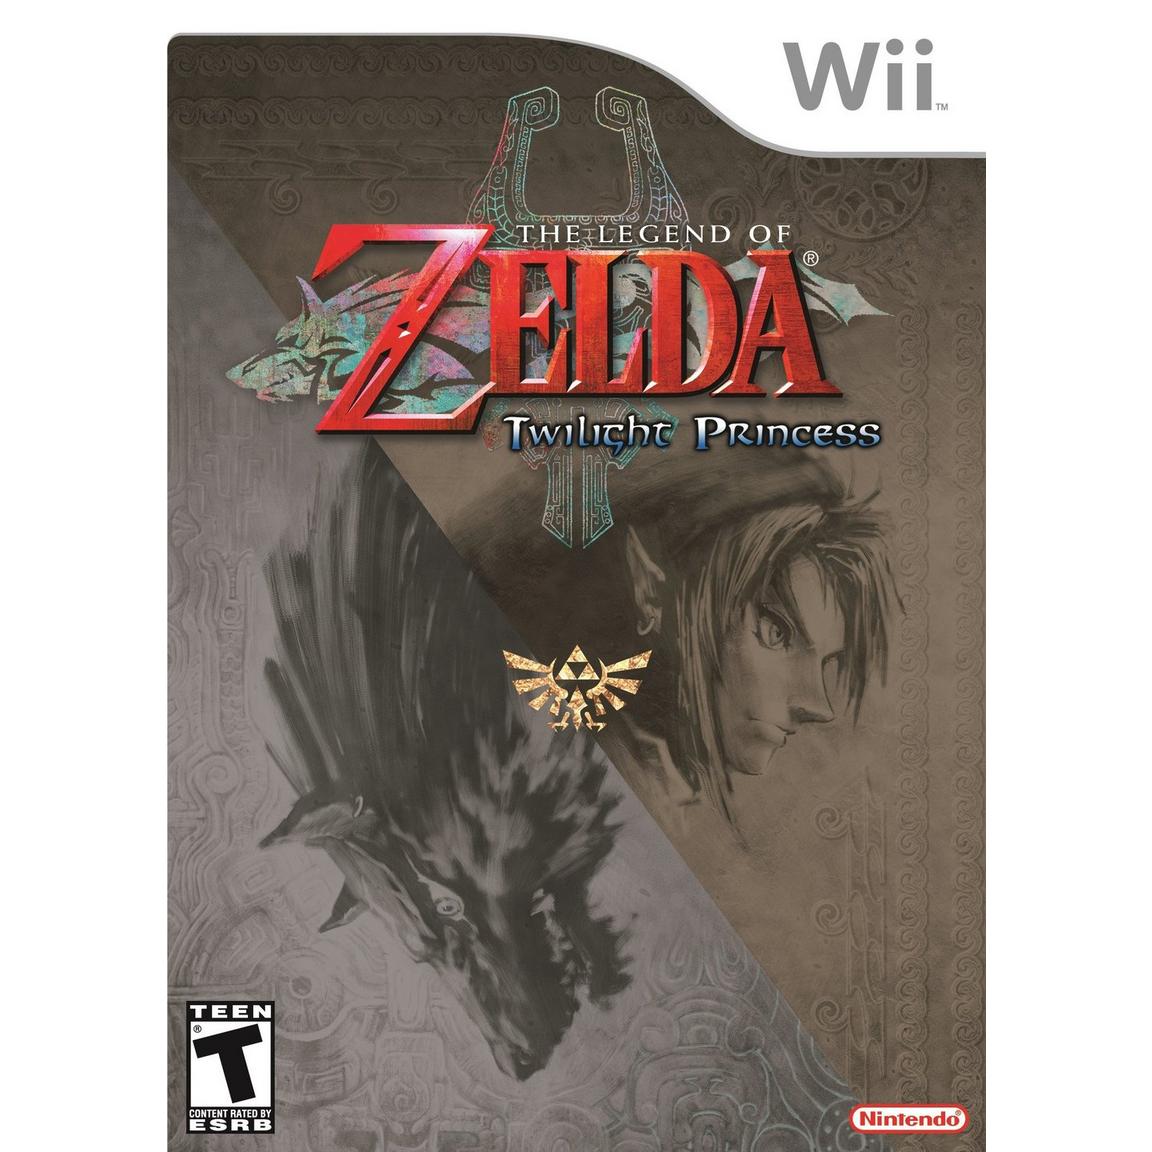 The Legend of Zelda: Twilight Princess - Nintendo Wii, Pre-Owned